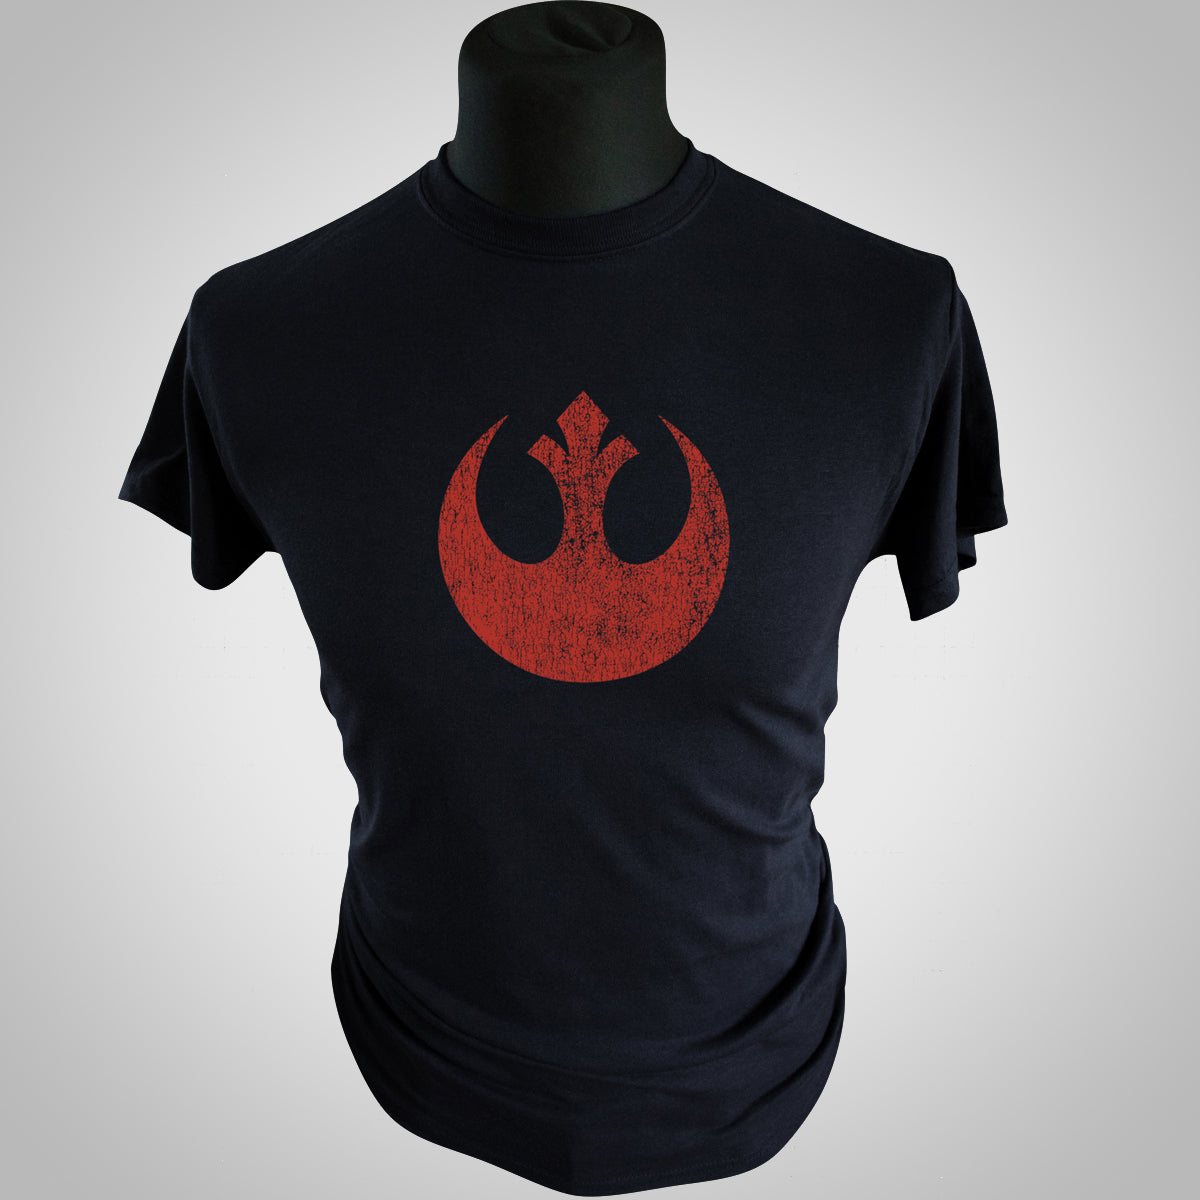 Rebel Alliance Symbol T Shirt